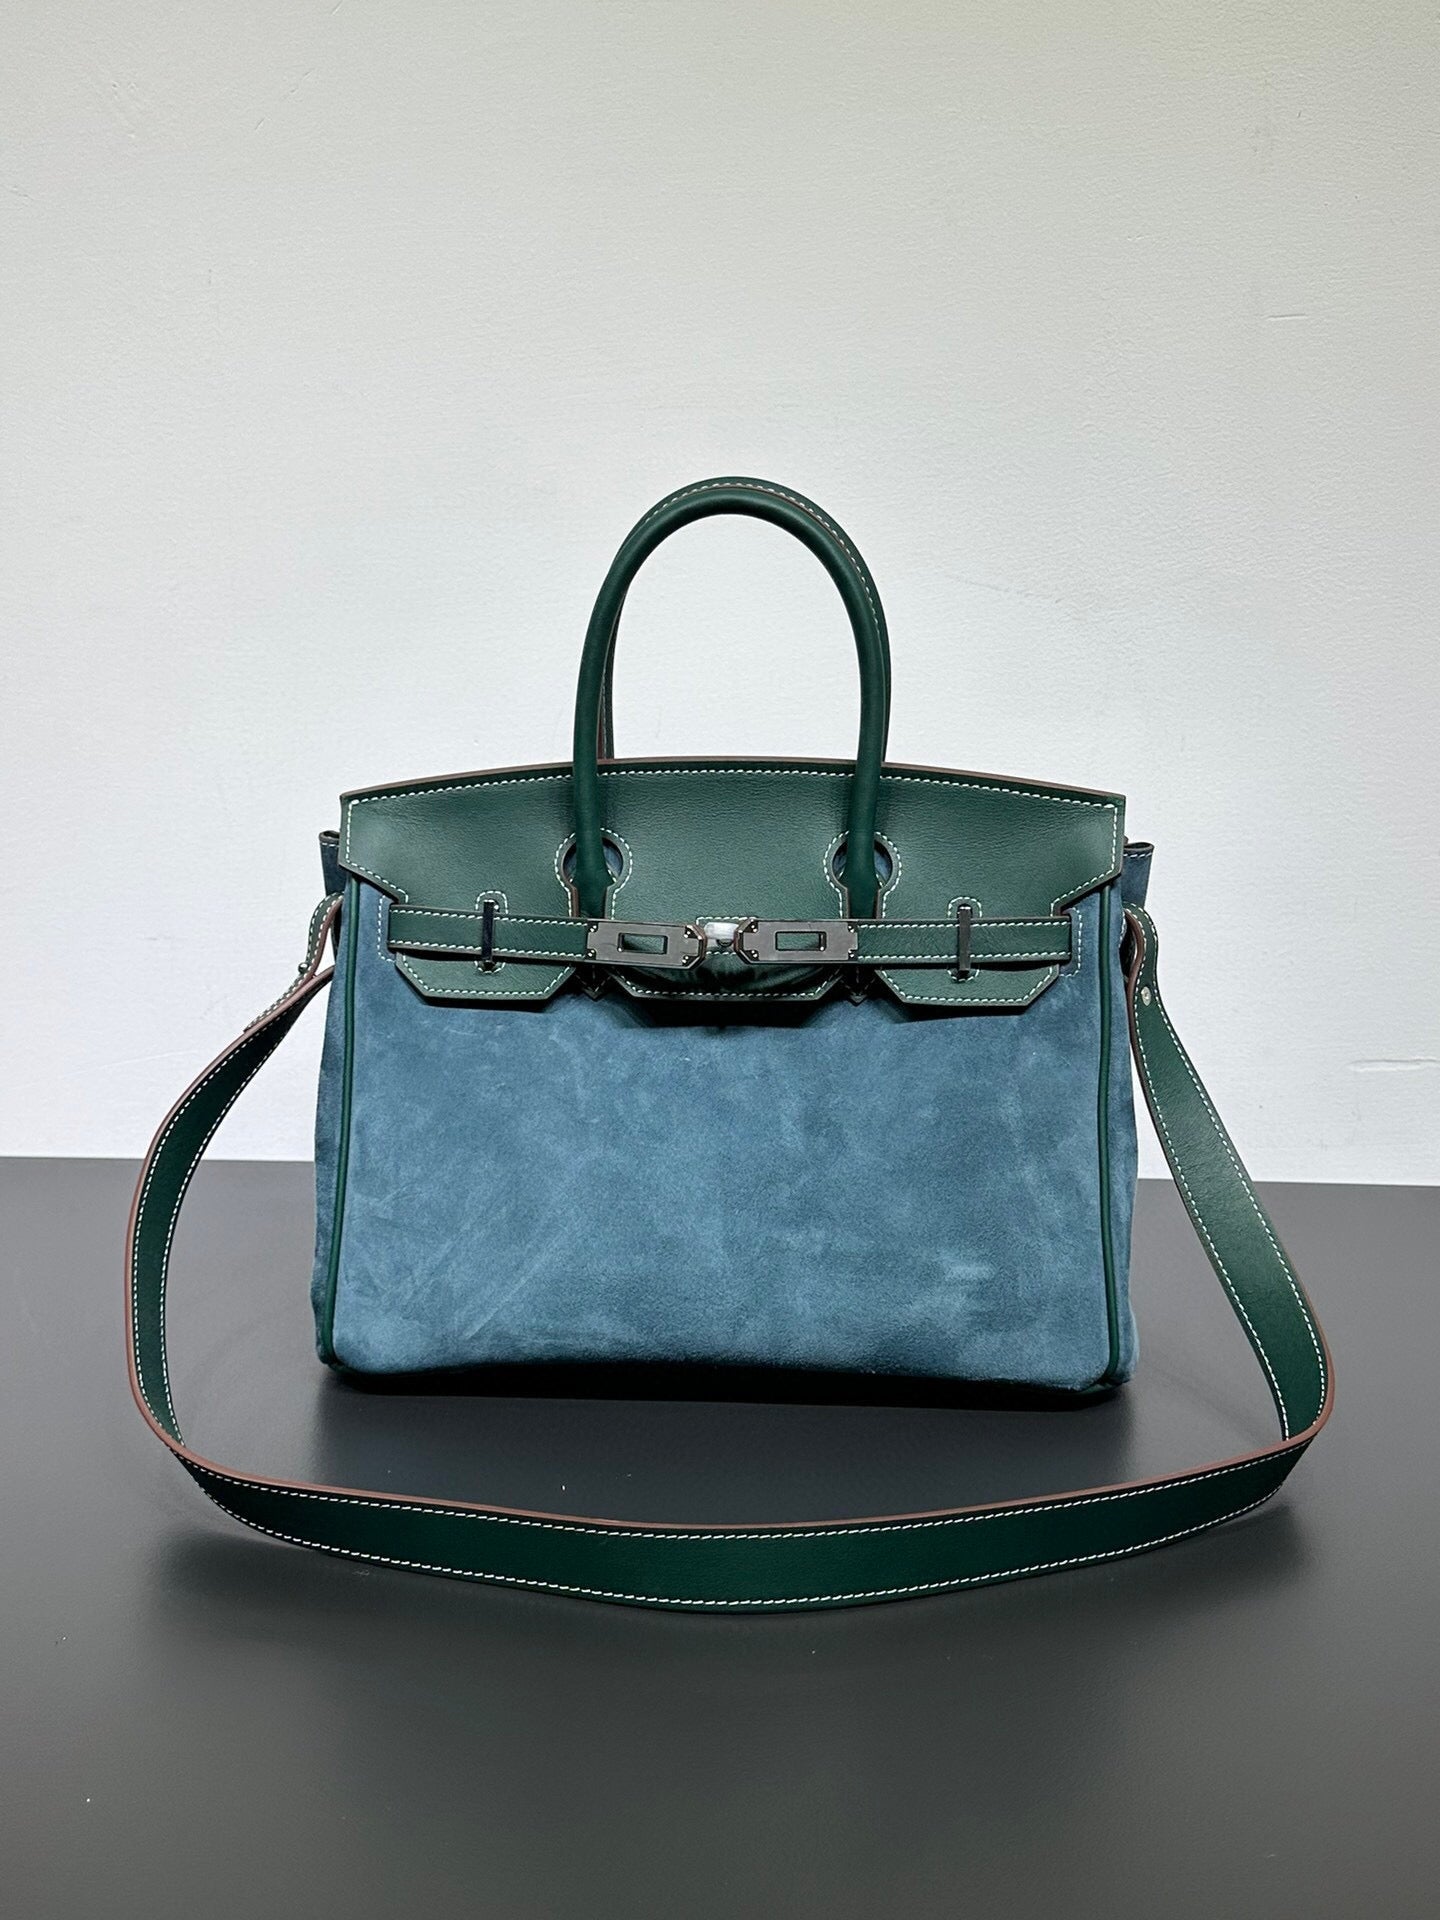 Womens Suede Leather Padlock Top Handle Bag Dark Green